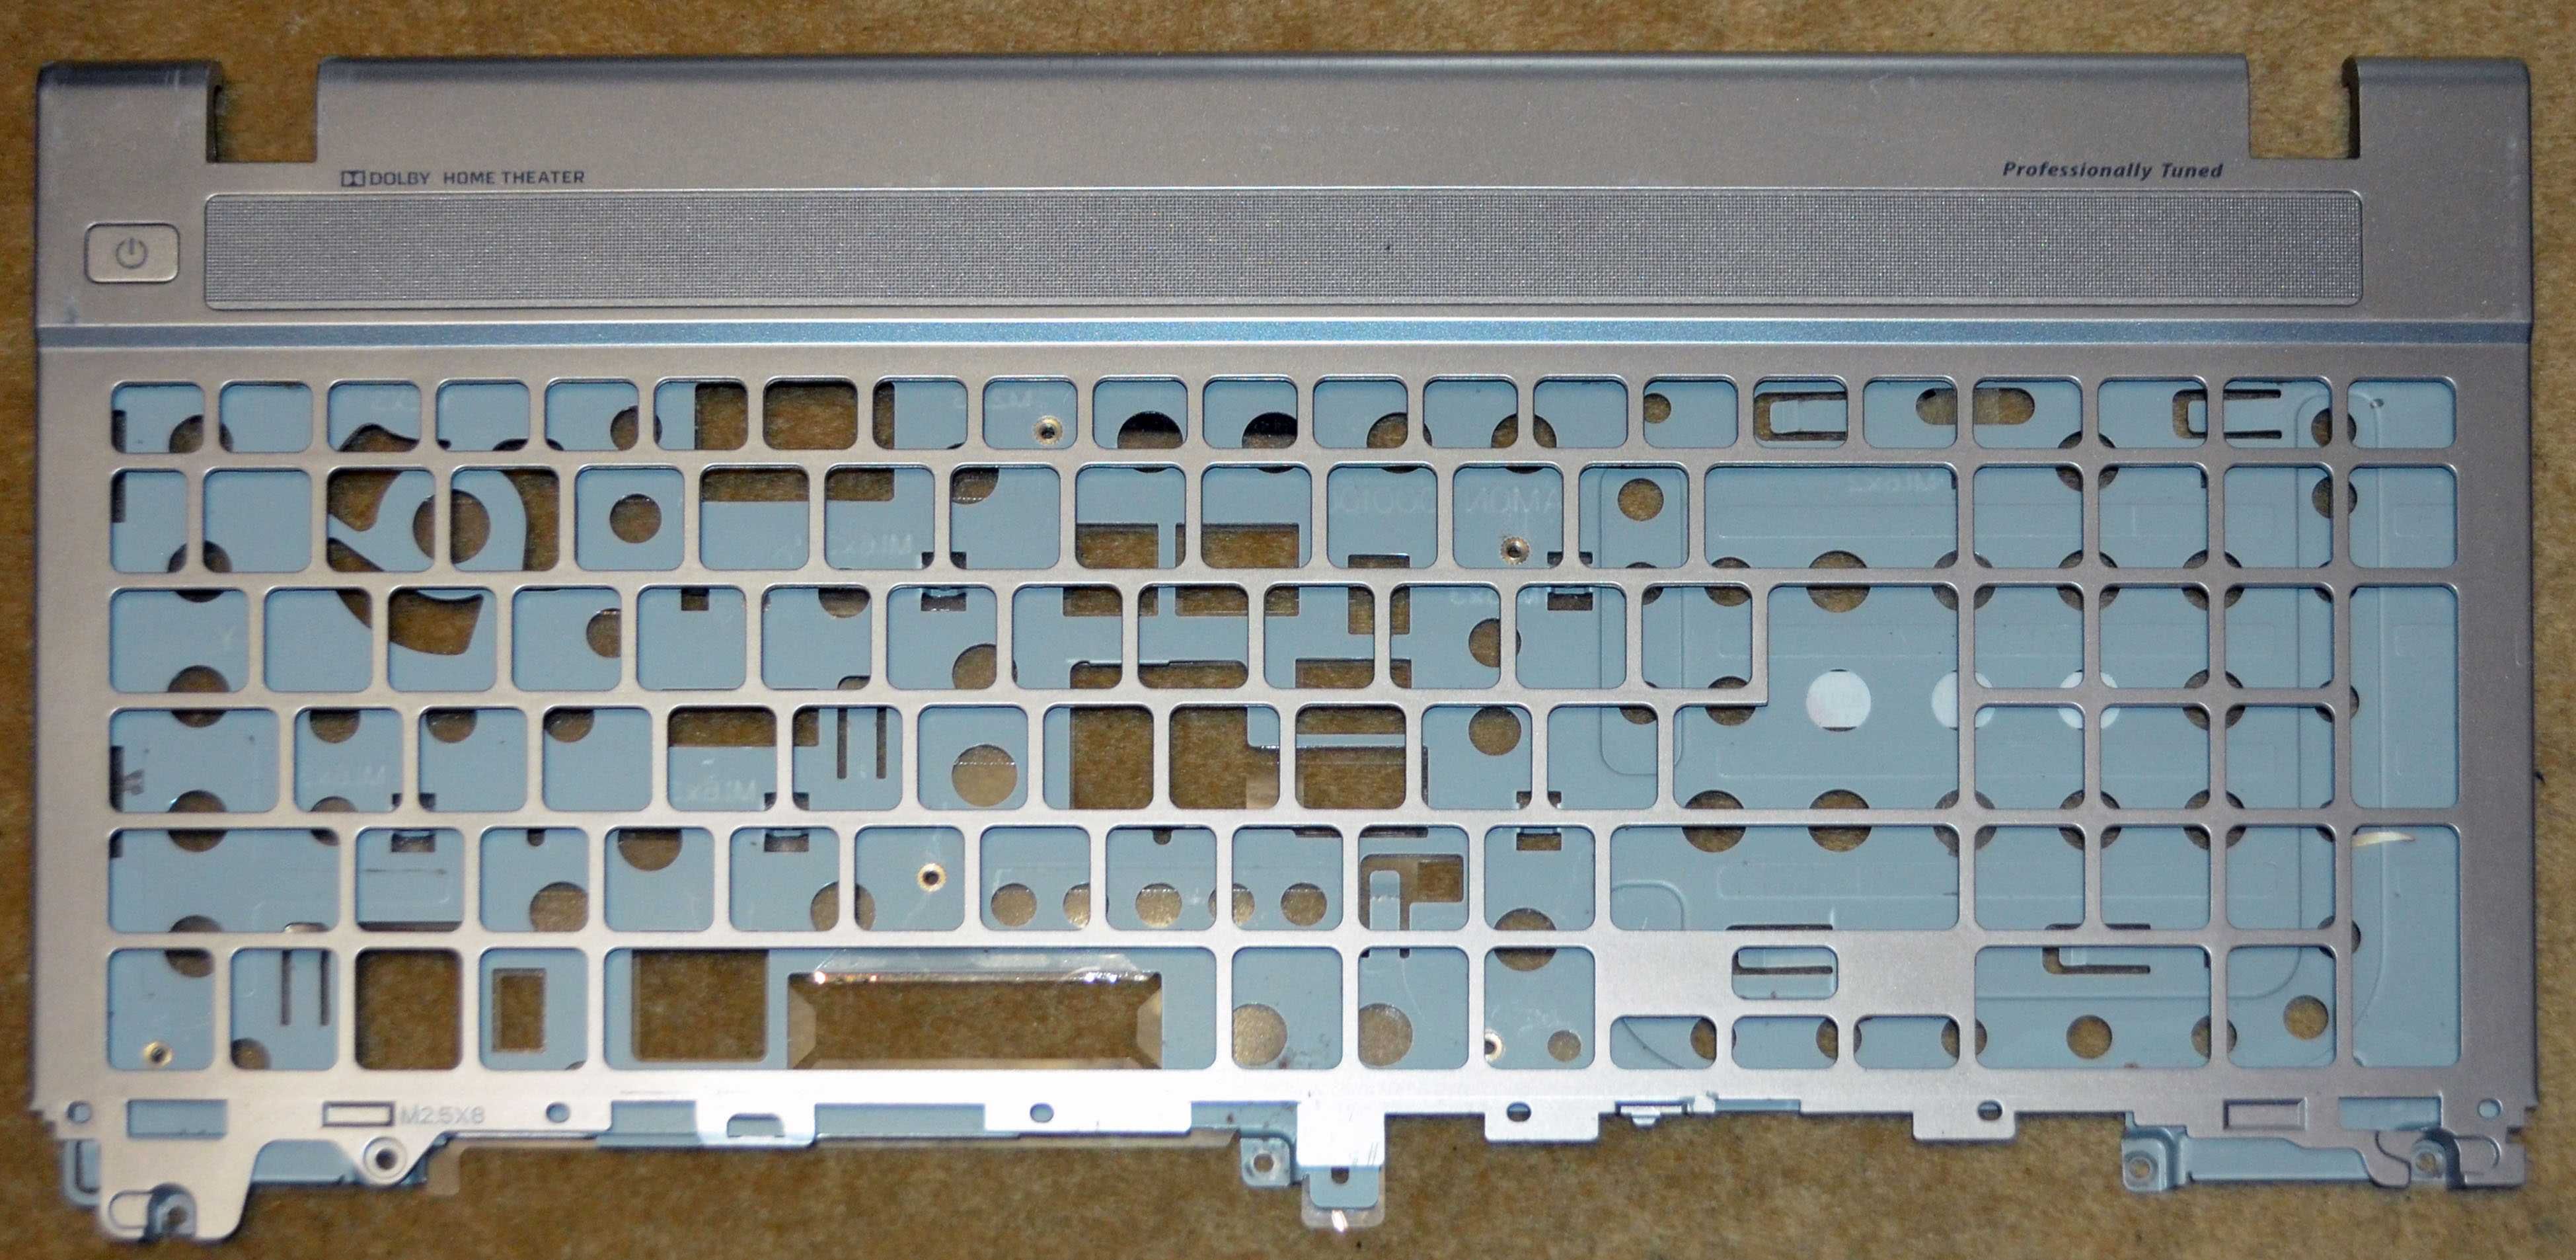 Ноутбук Acer E1-531G (5750G, V3-571G, P5WS0) по запчастям.